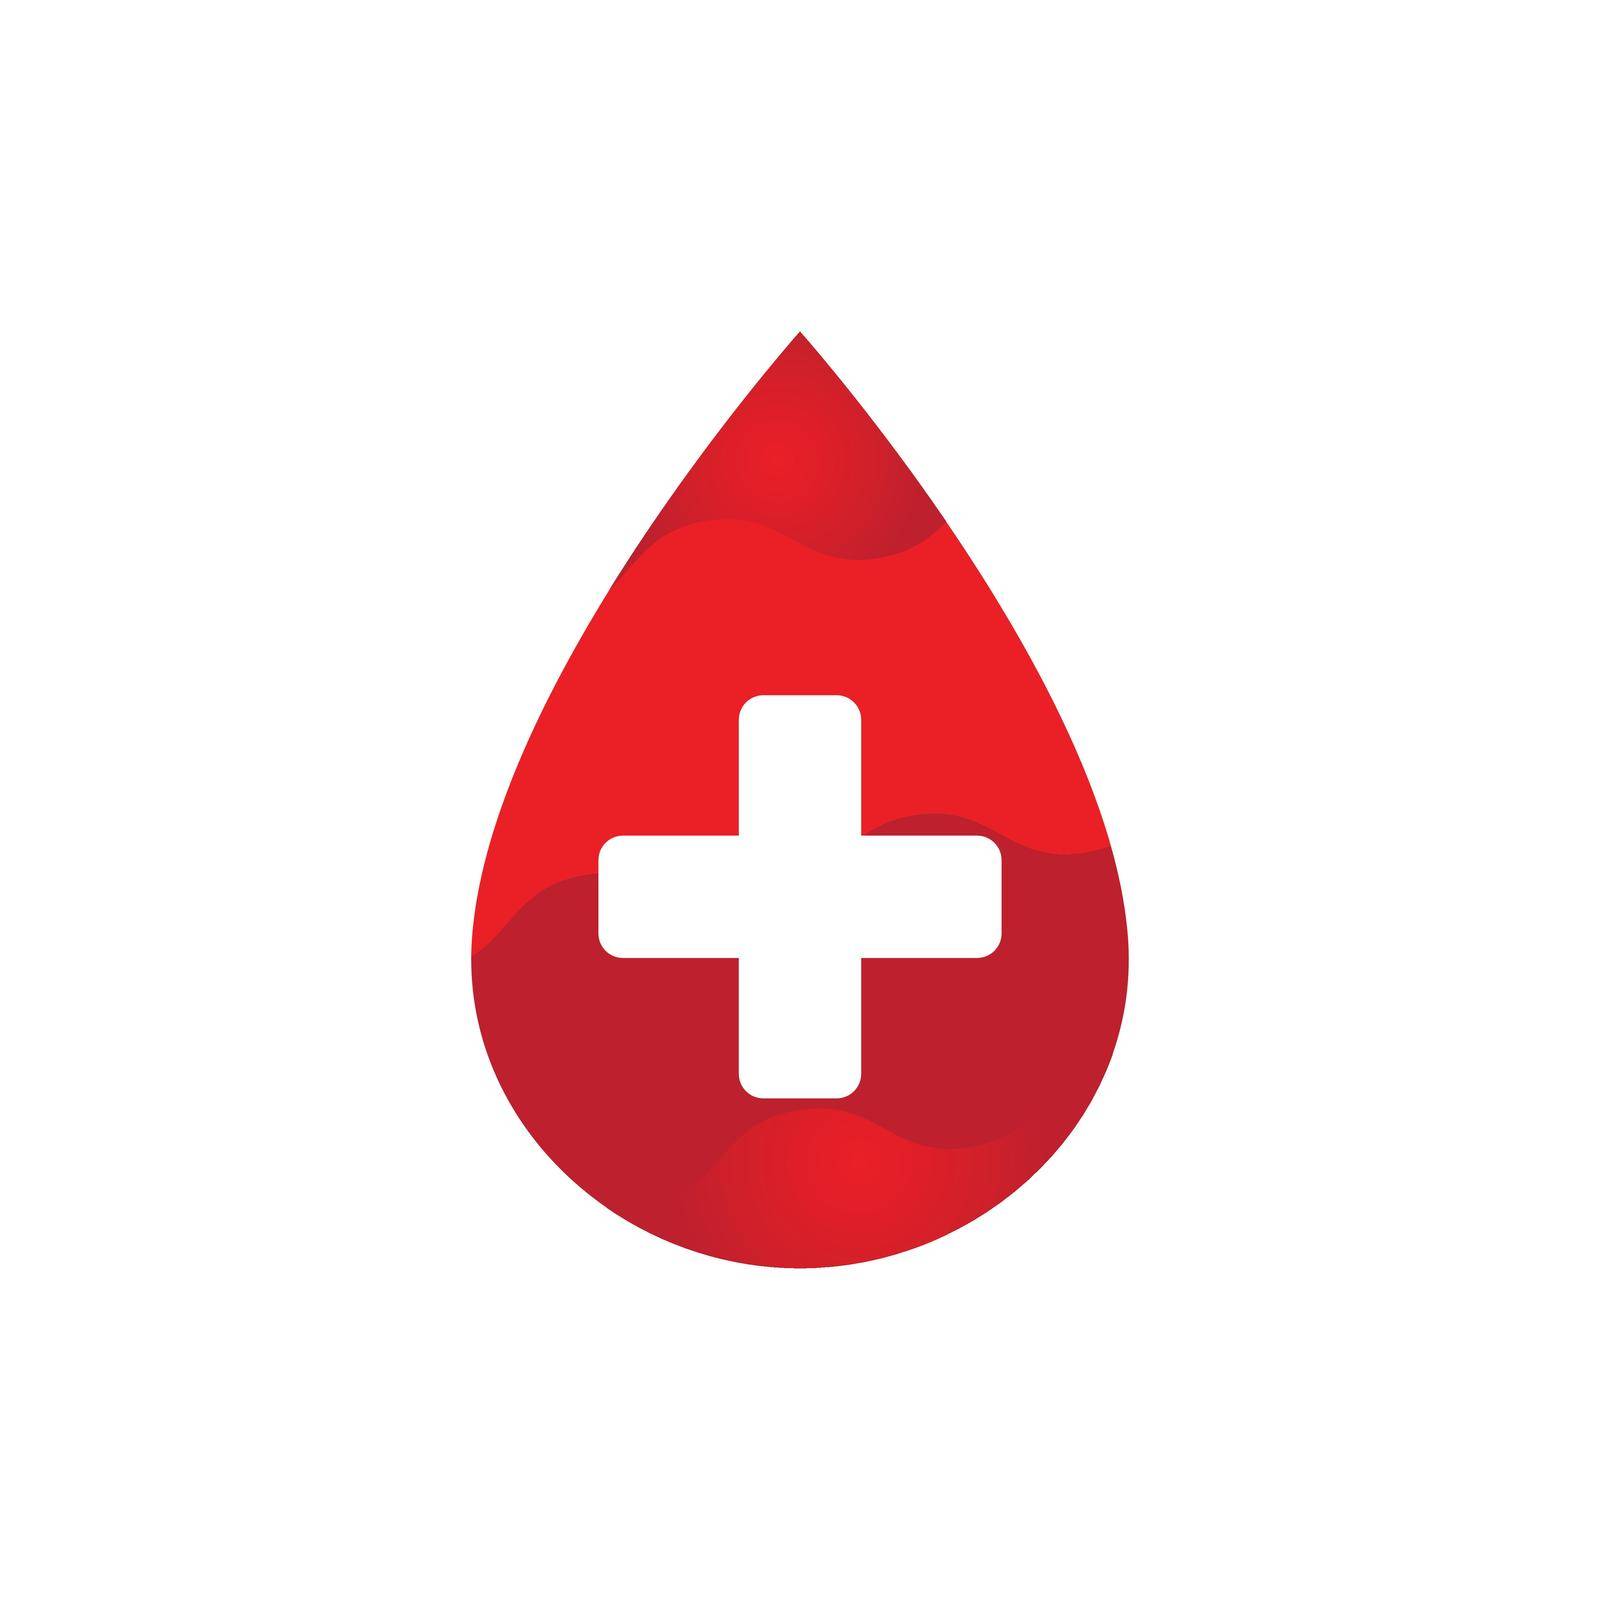 Blood ilustration logo by hasan02